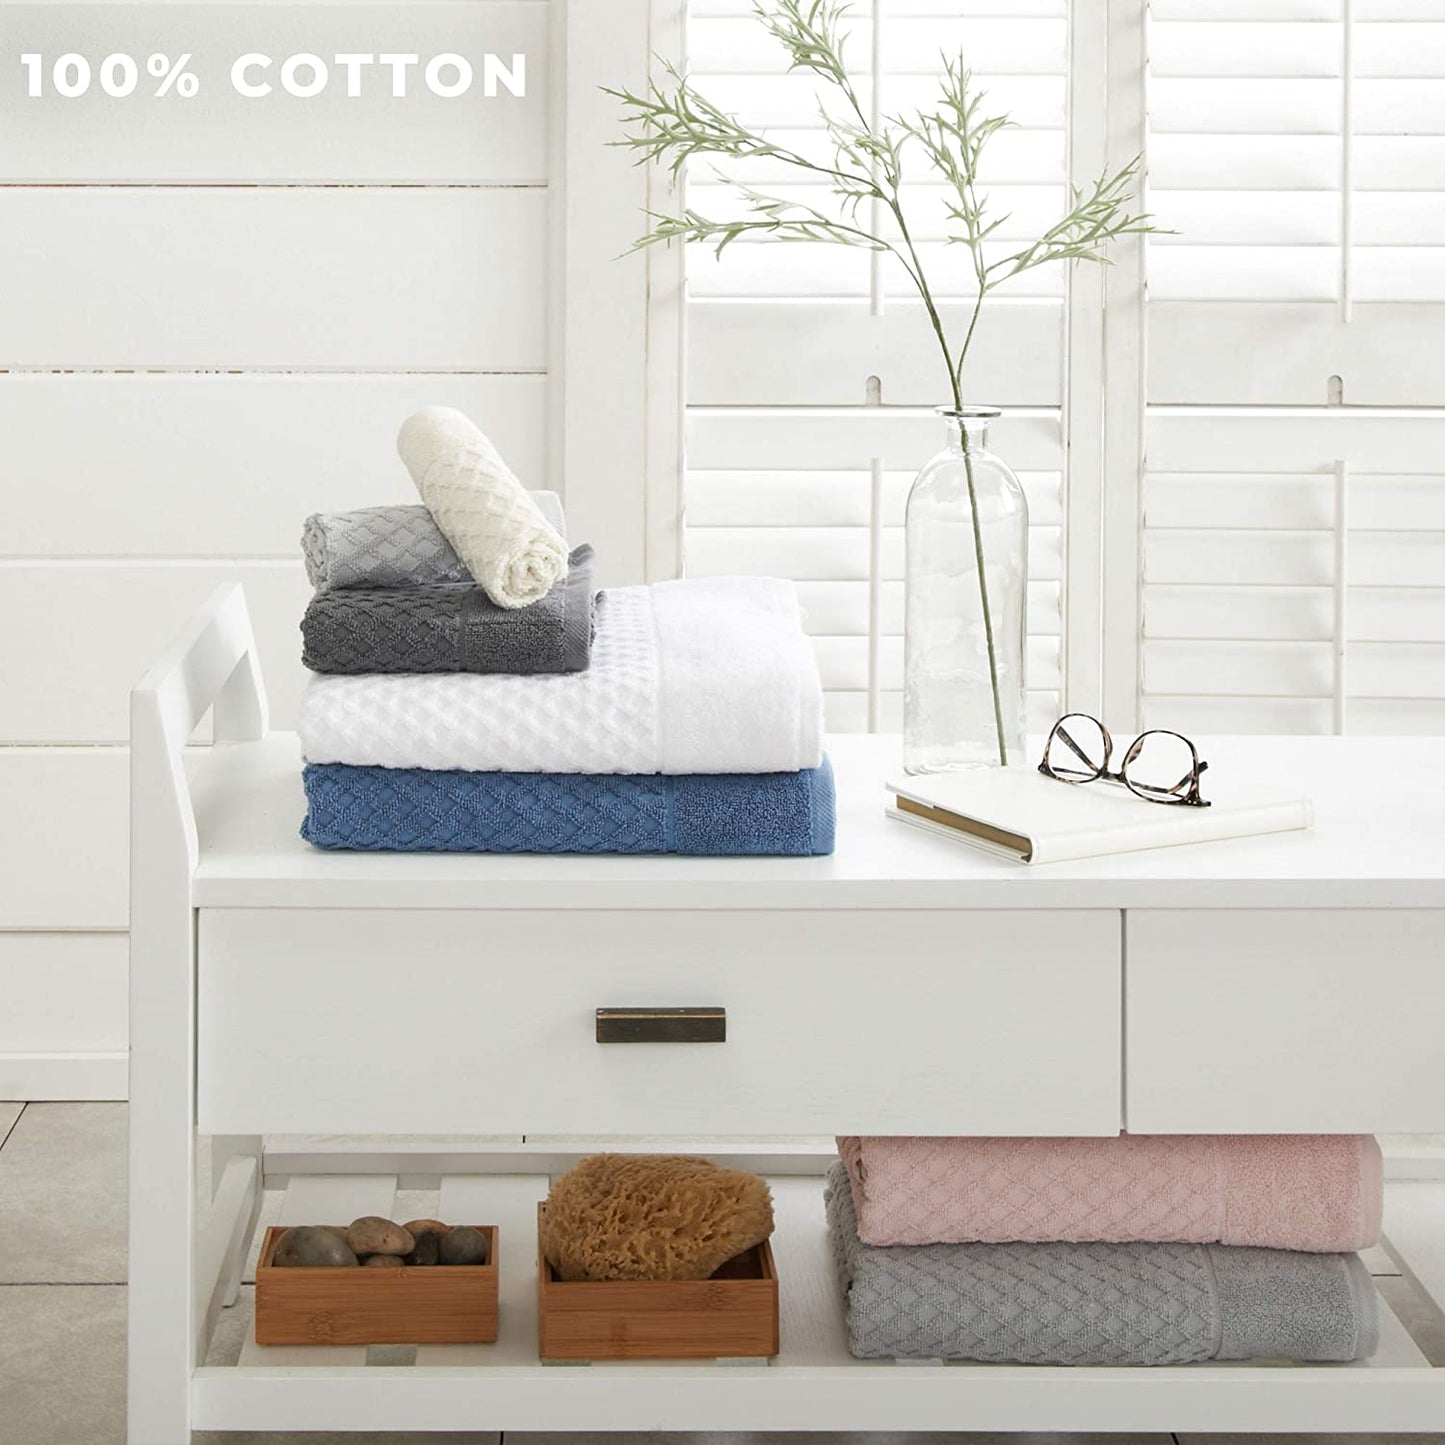 100% Cotton White Diamond Bath Towels (4-Pack)